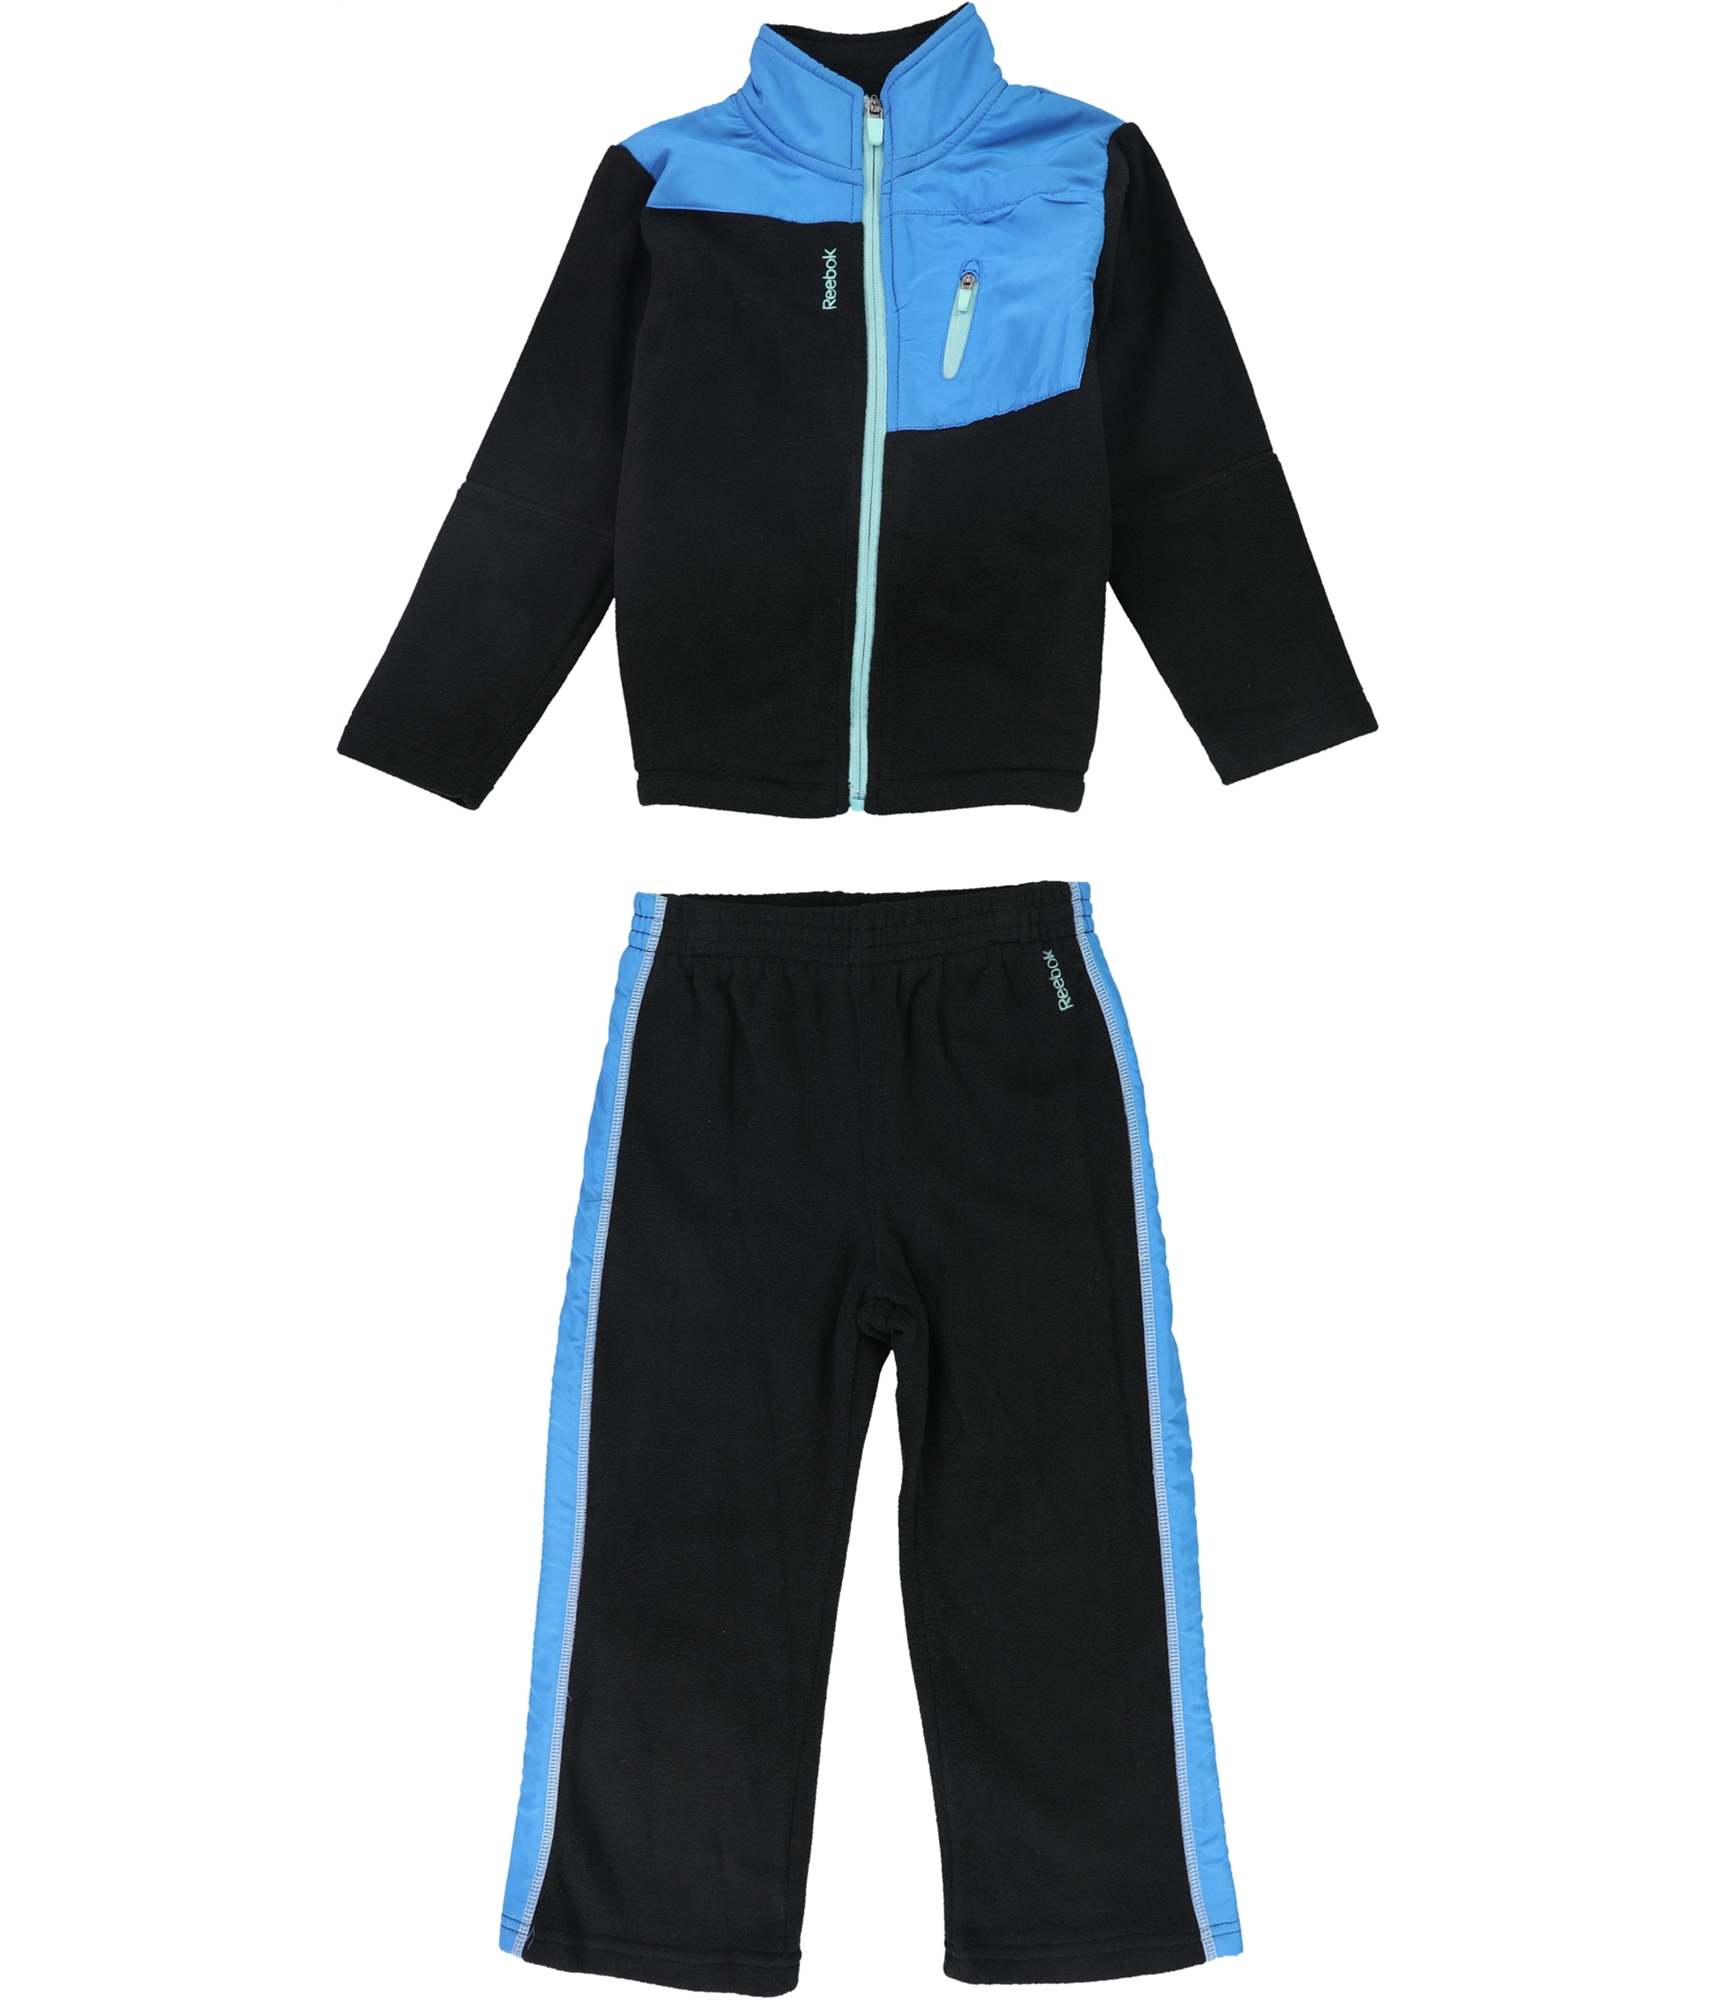 Girls-sweatsuit-for-infants